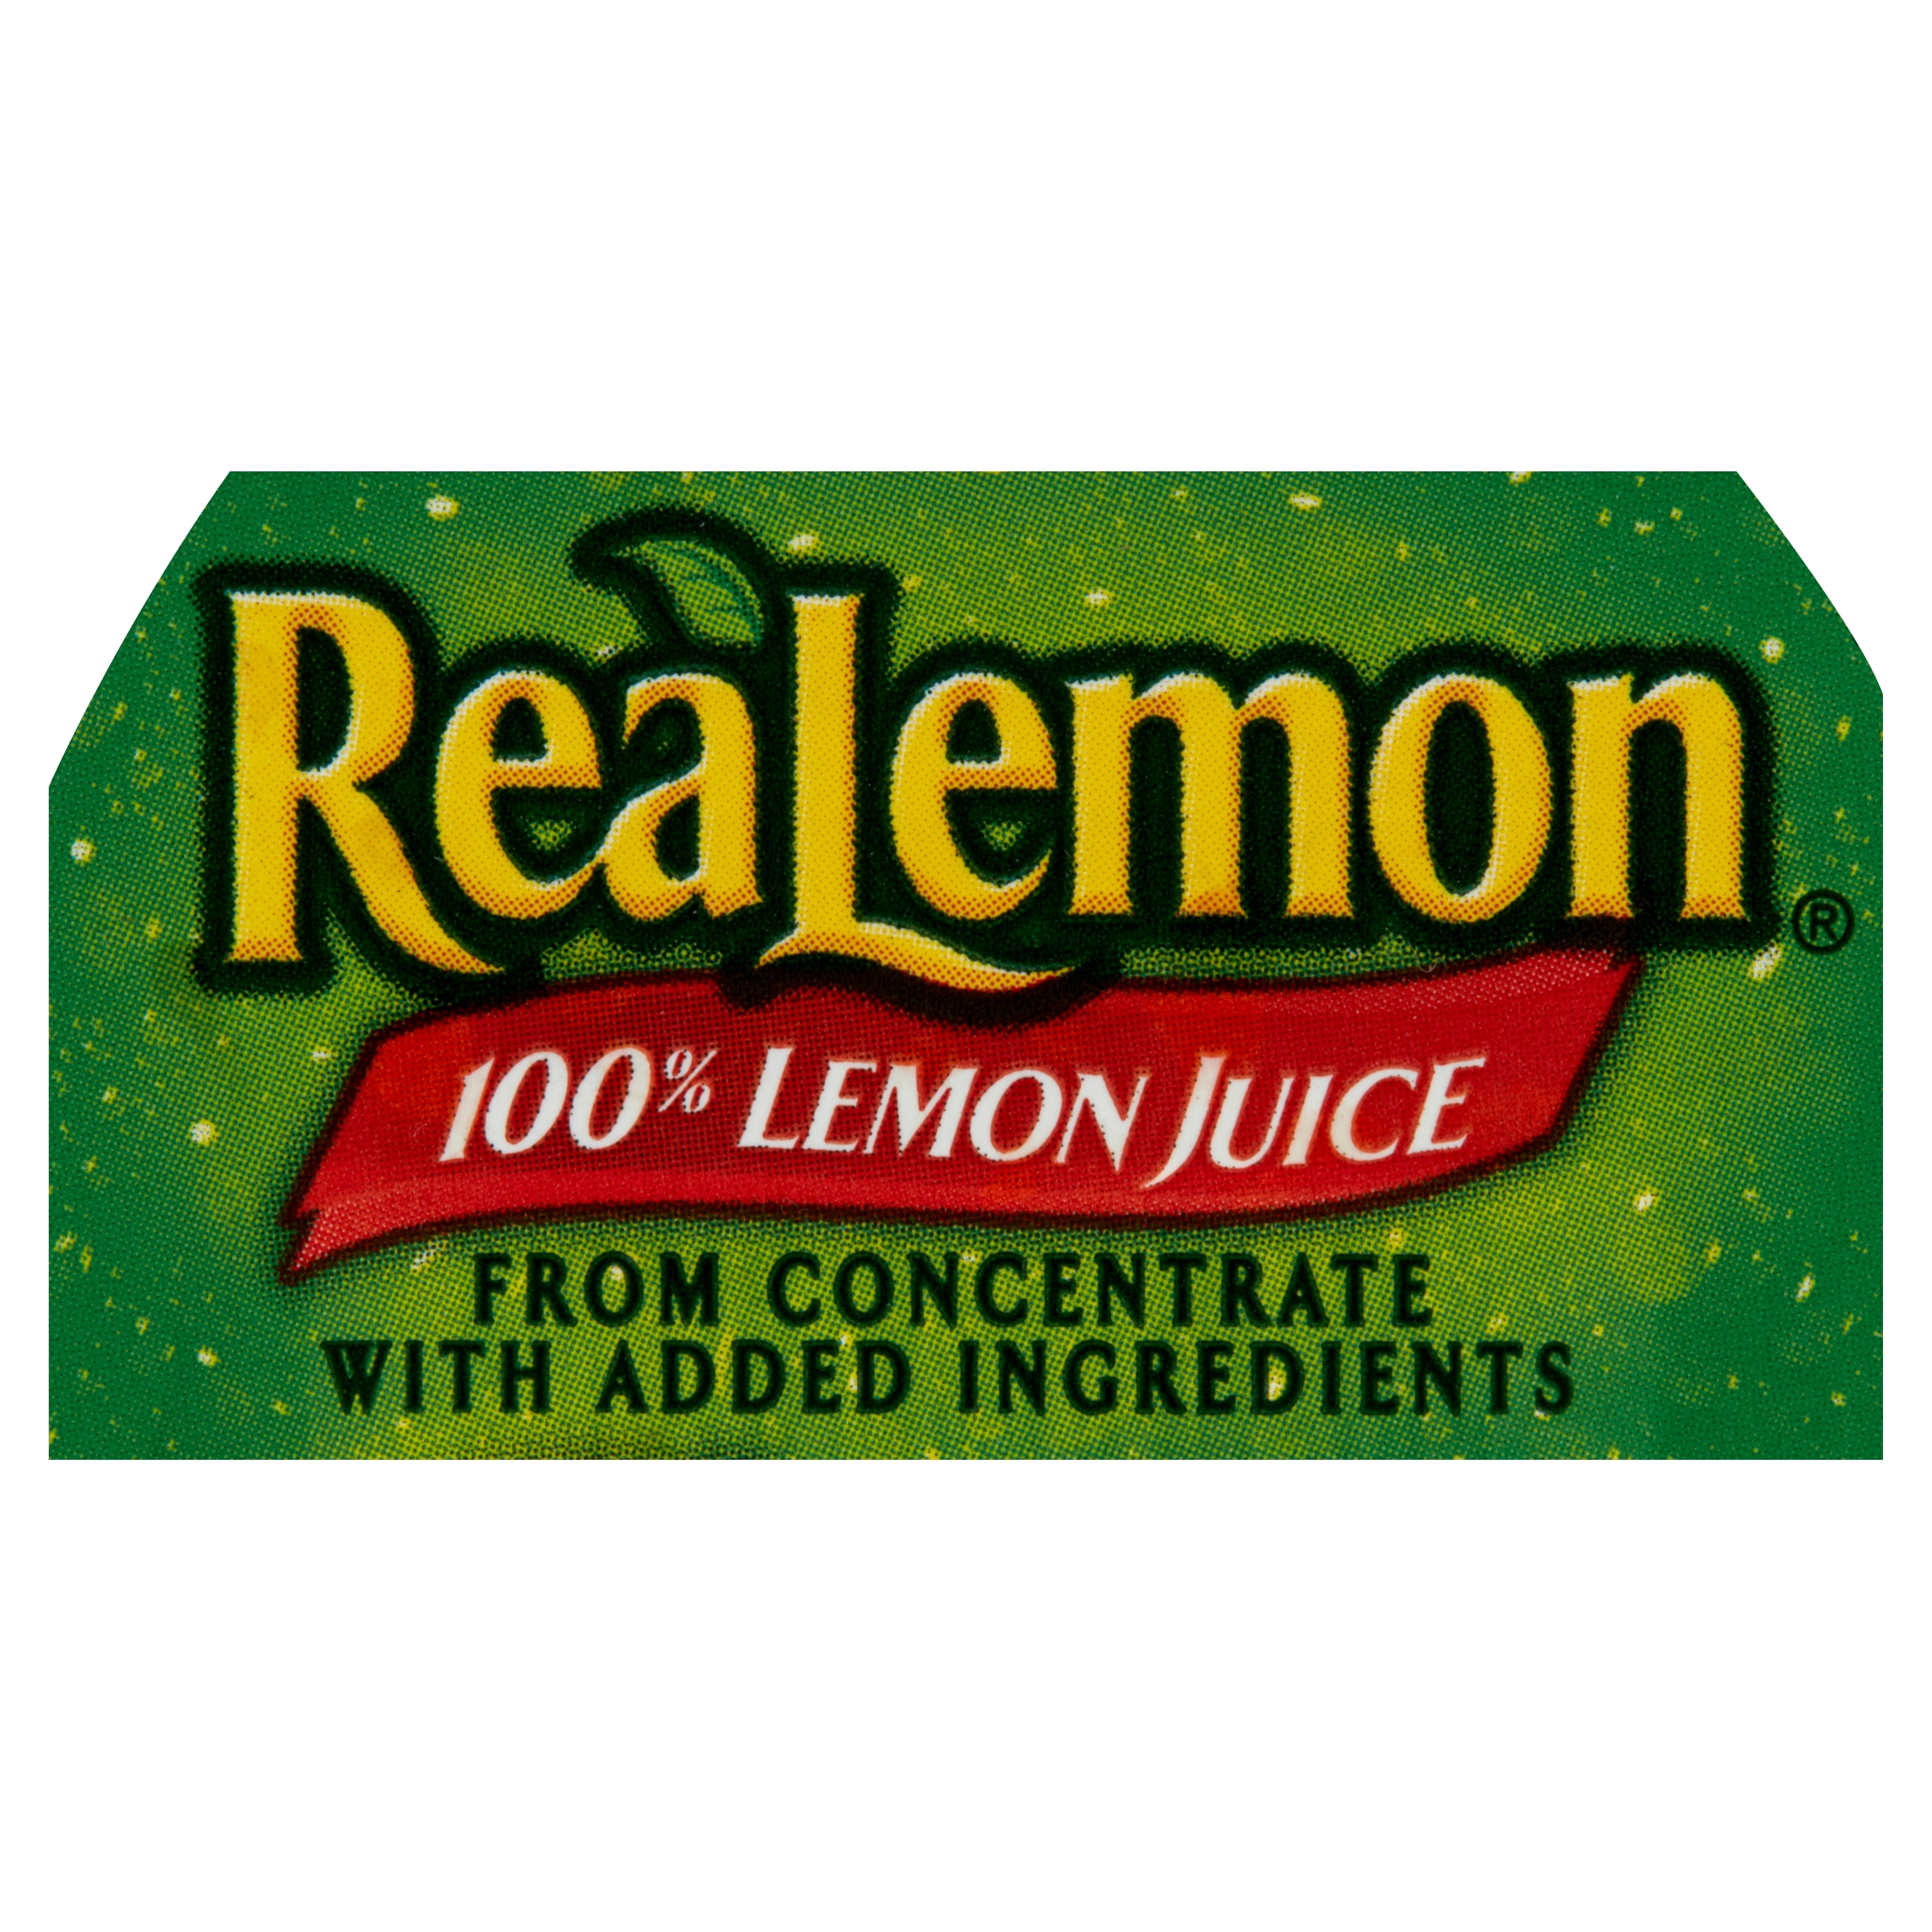 ReaLemon 100% Lemon Juice, 4.5 fl oz bottle - image 4 of 5